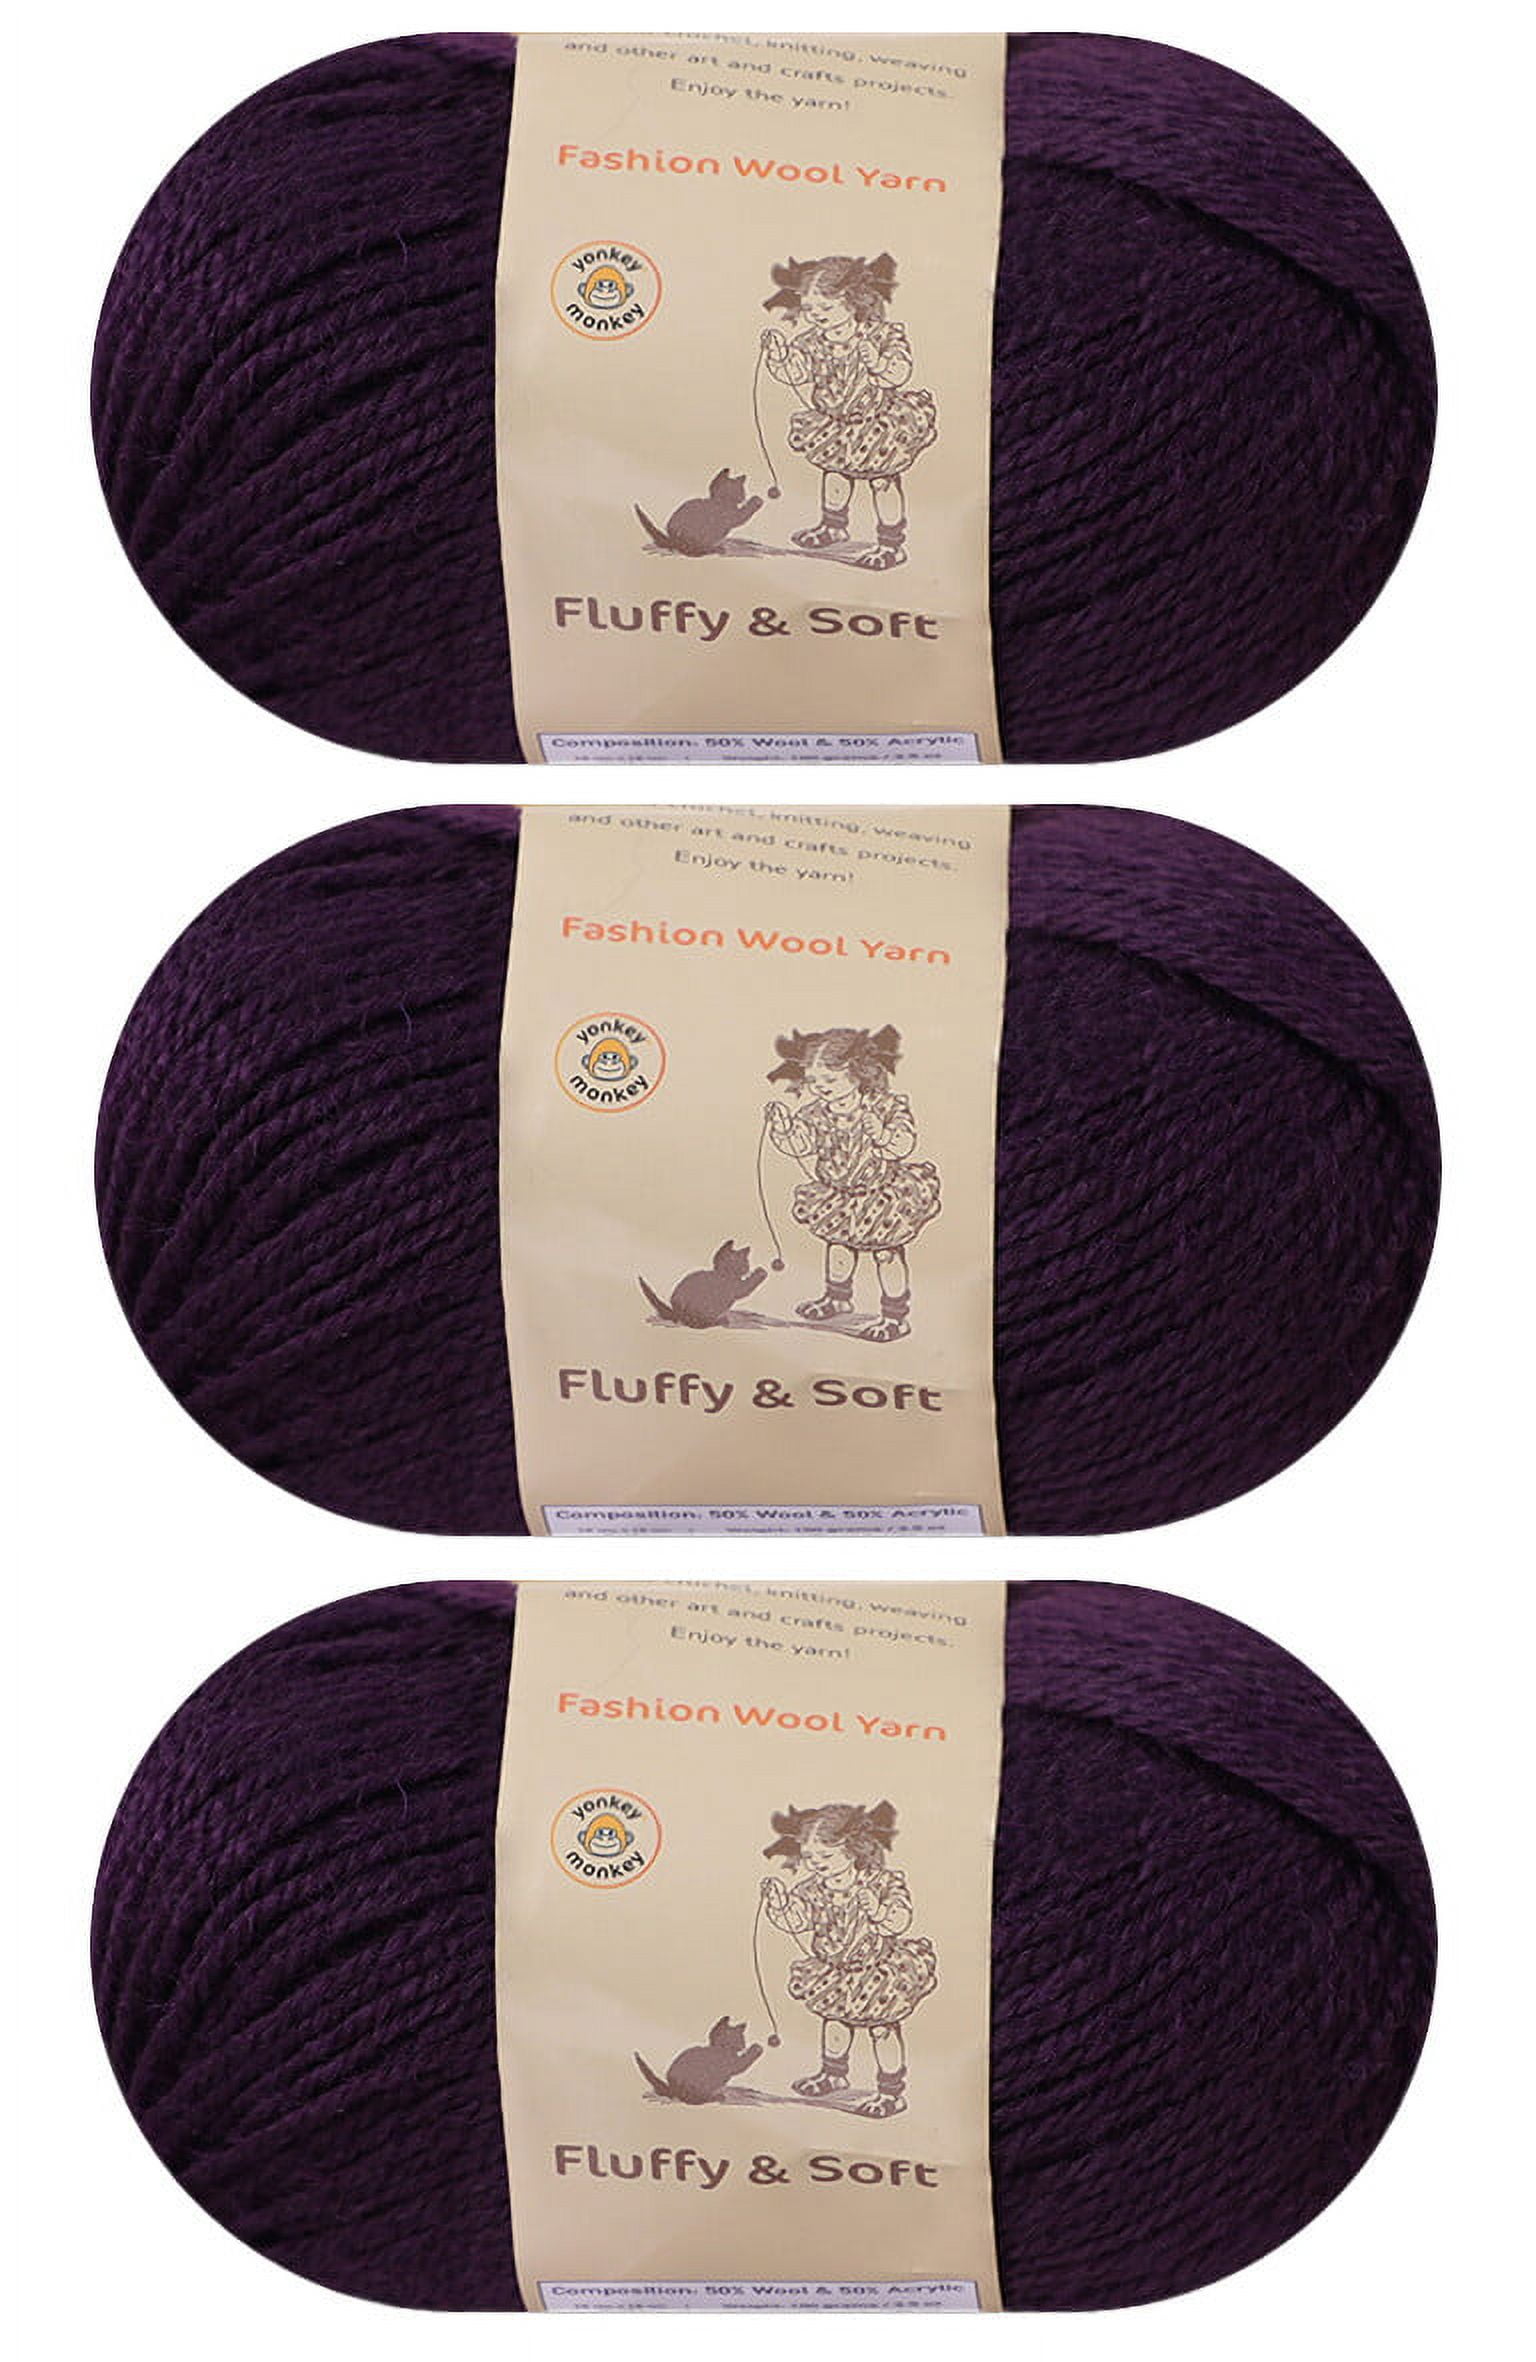  2-pk Gradient Cake Yarn Cotton Ball by Yonkey Monkey Rainbow  Multicolor Comfy for Knitting, Crochet, DIY, Art, Craft Project (1171)